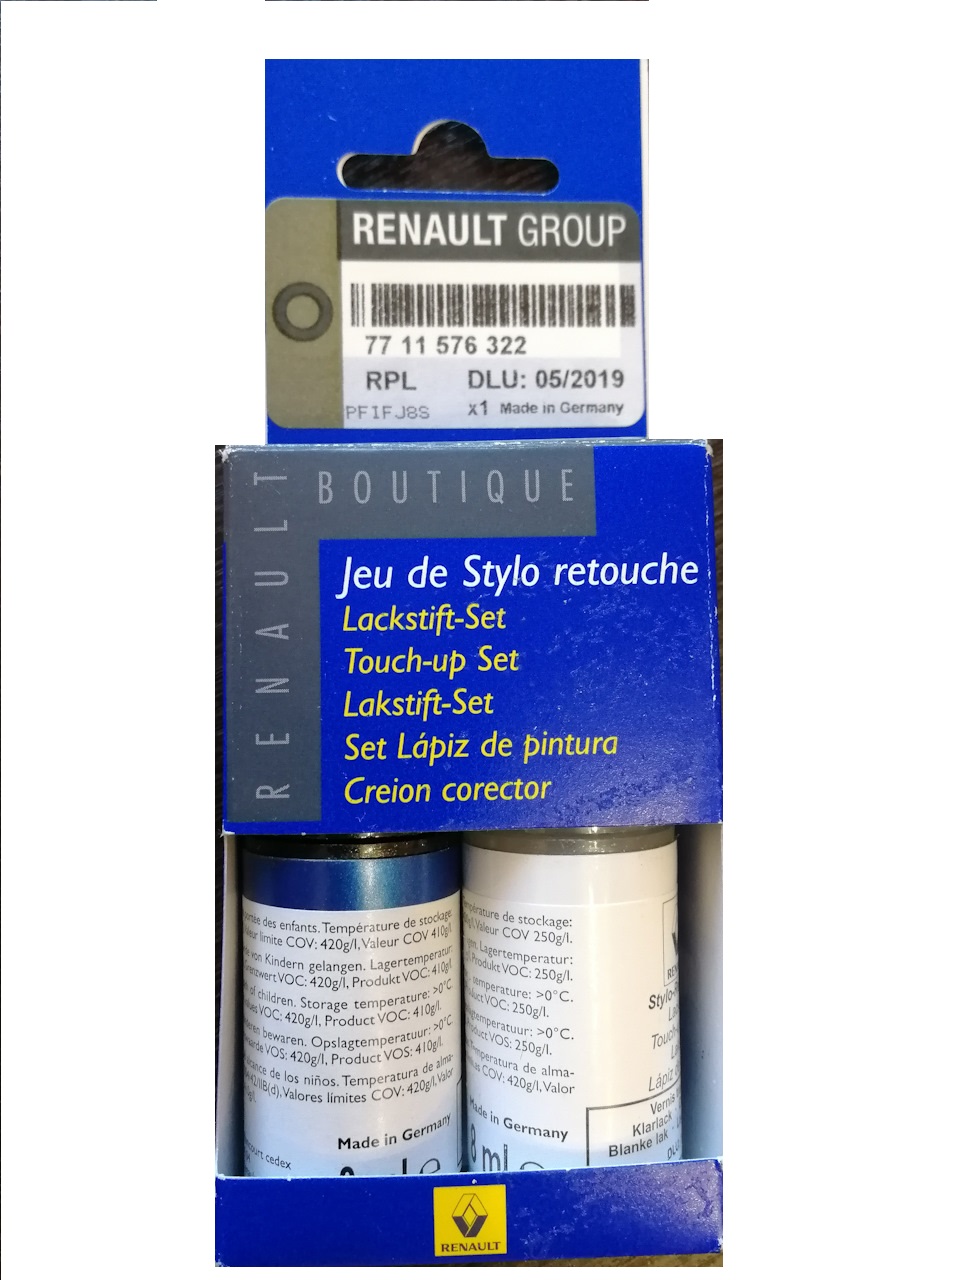 Renault 77 11 576 322 Paint and varnish, set (pencil tint) 7711576322